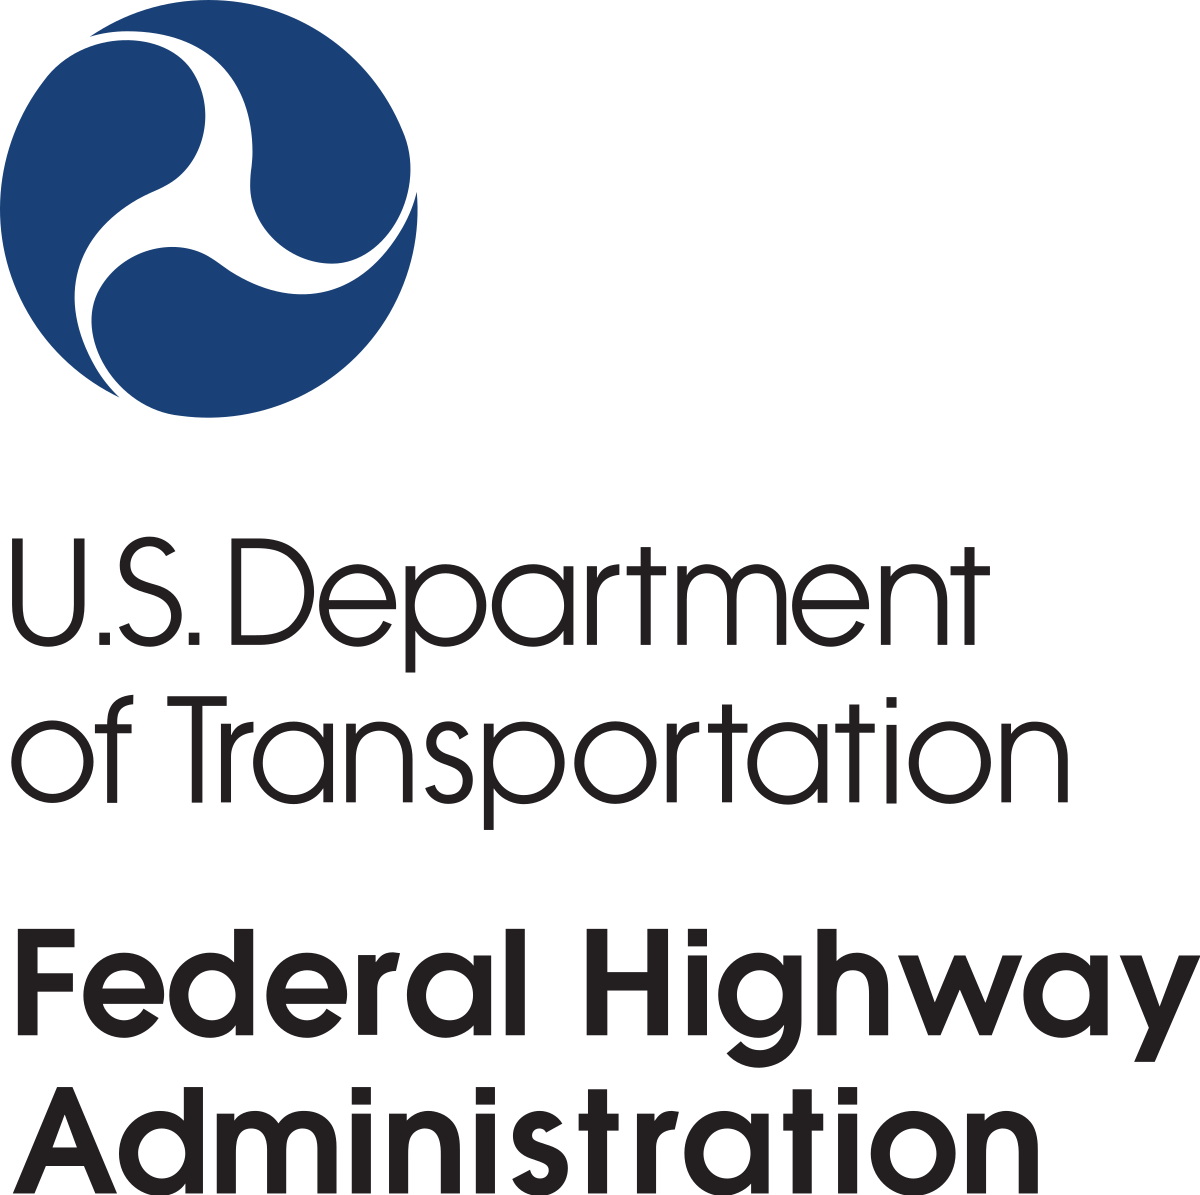 Federal Highway Admin logo